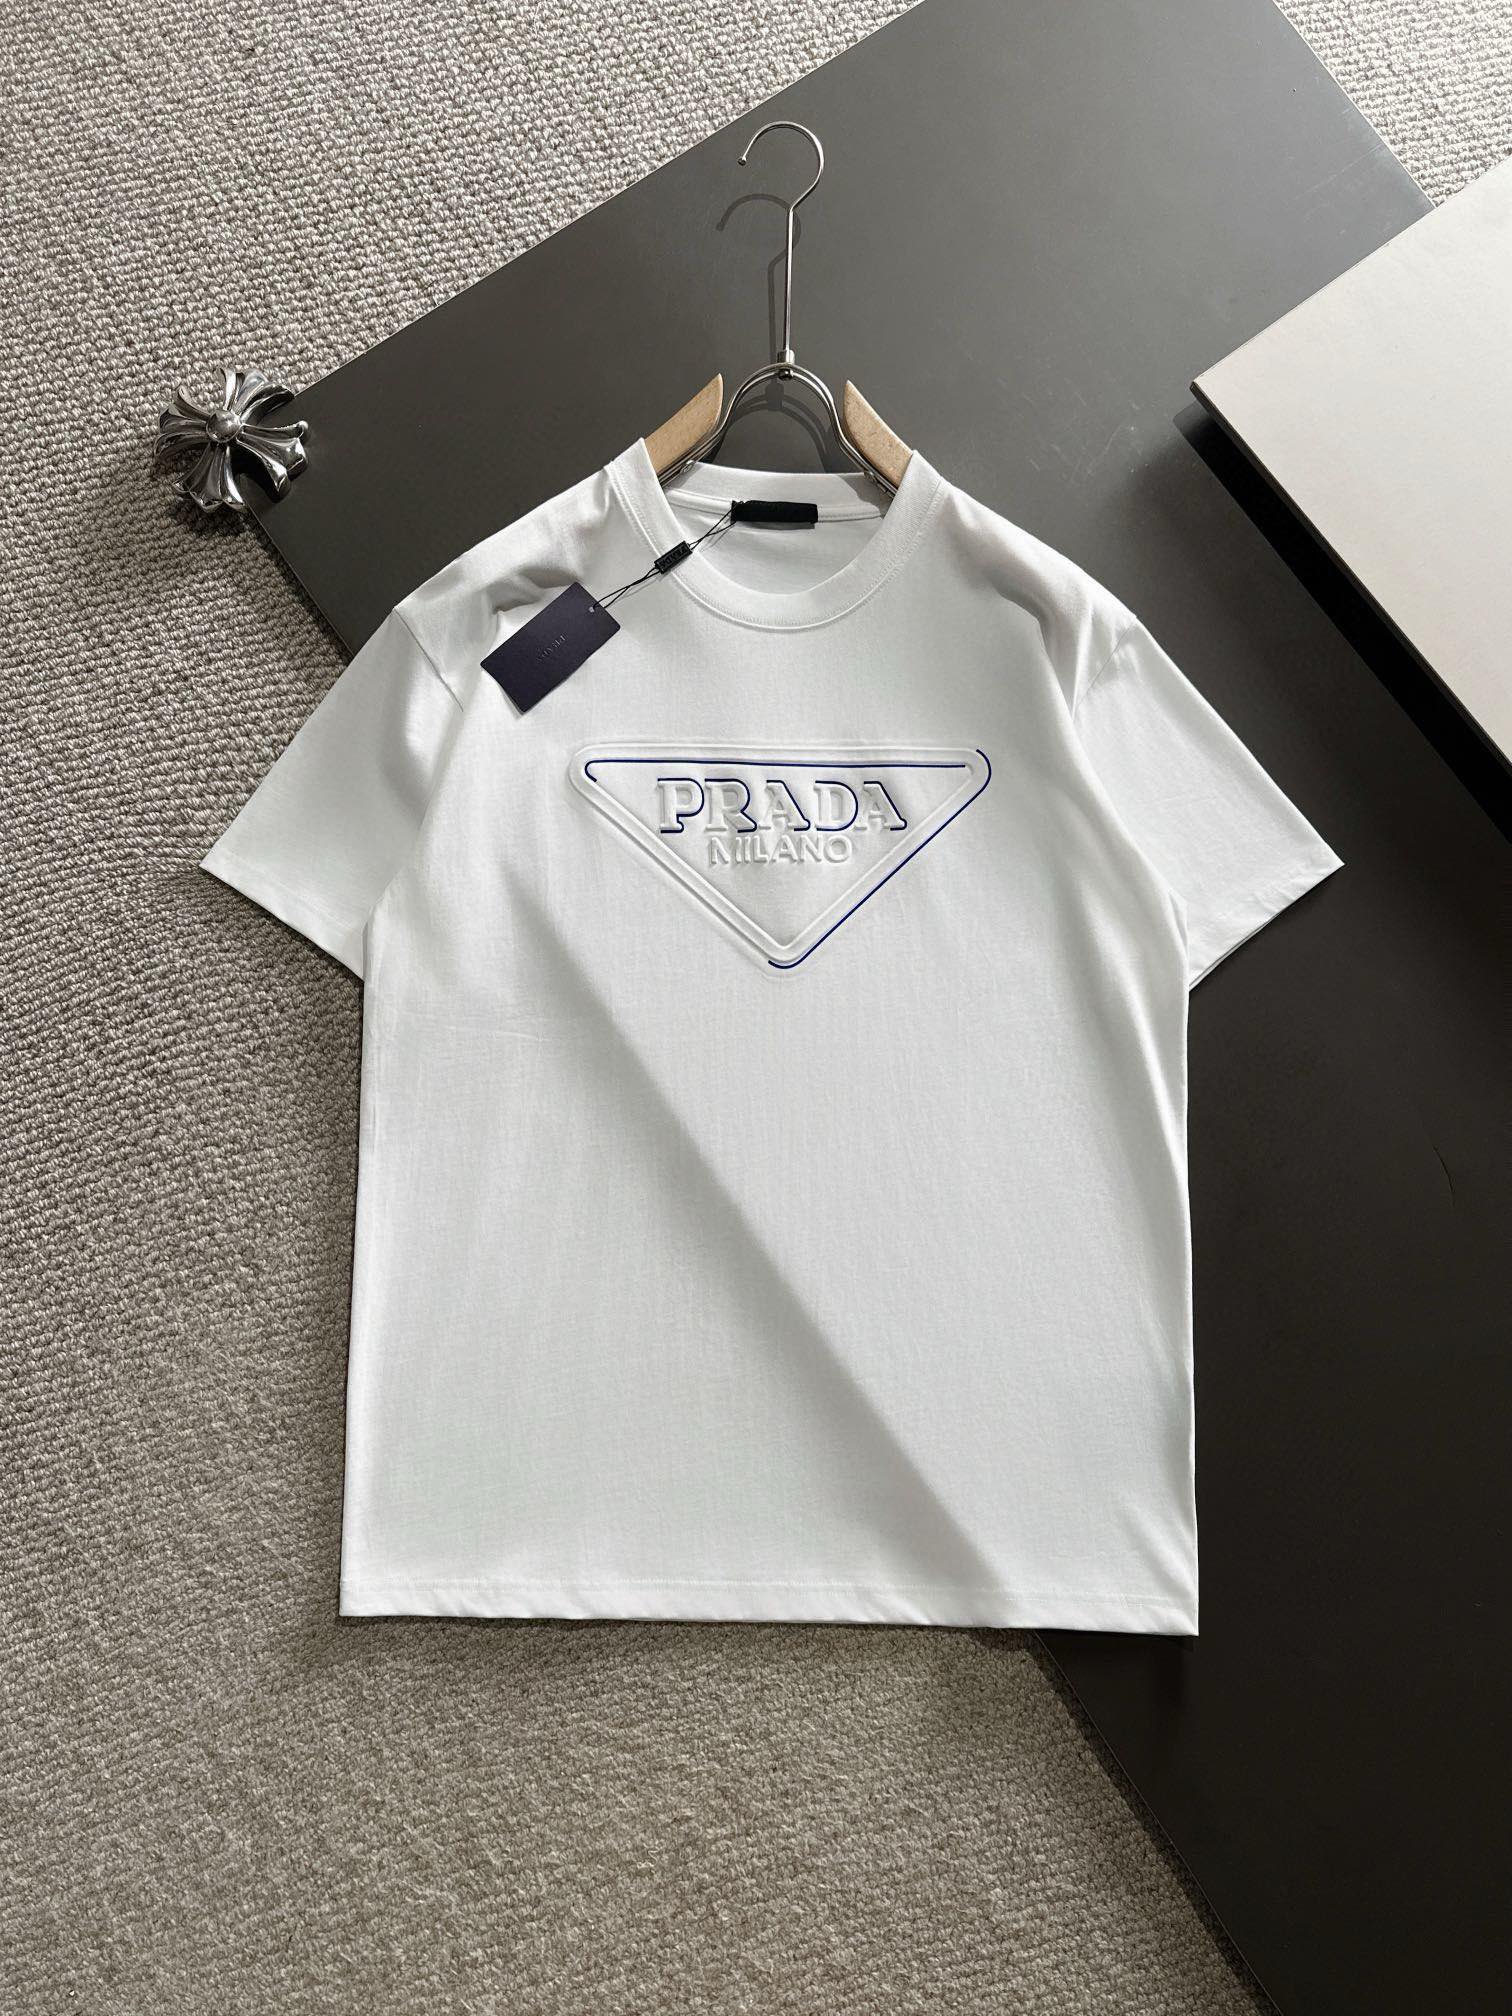 Prada Clothing T-Shirt Black White Unisex Spring Collection Short Sleeve